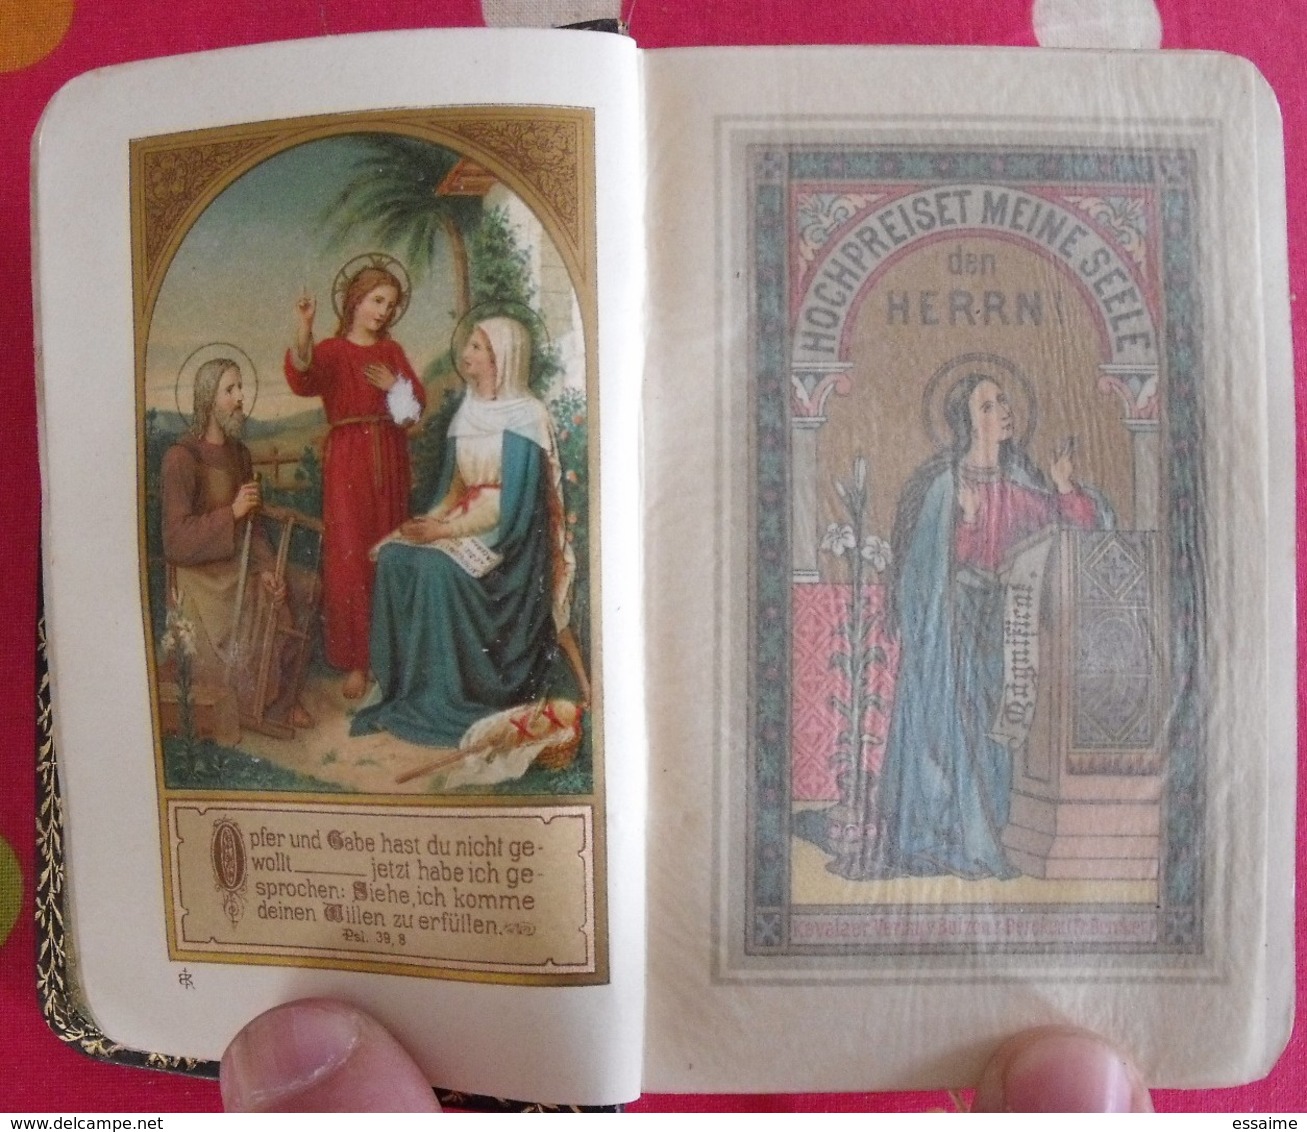 Hochpreiset Meine Seele Den Herrn. En Allemand. Missel Bible. Livre Religieux. 1900 - Libros Antiguos Y De Colección